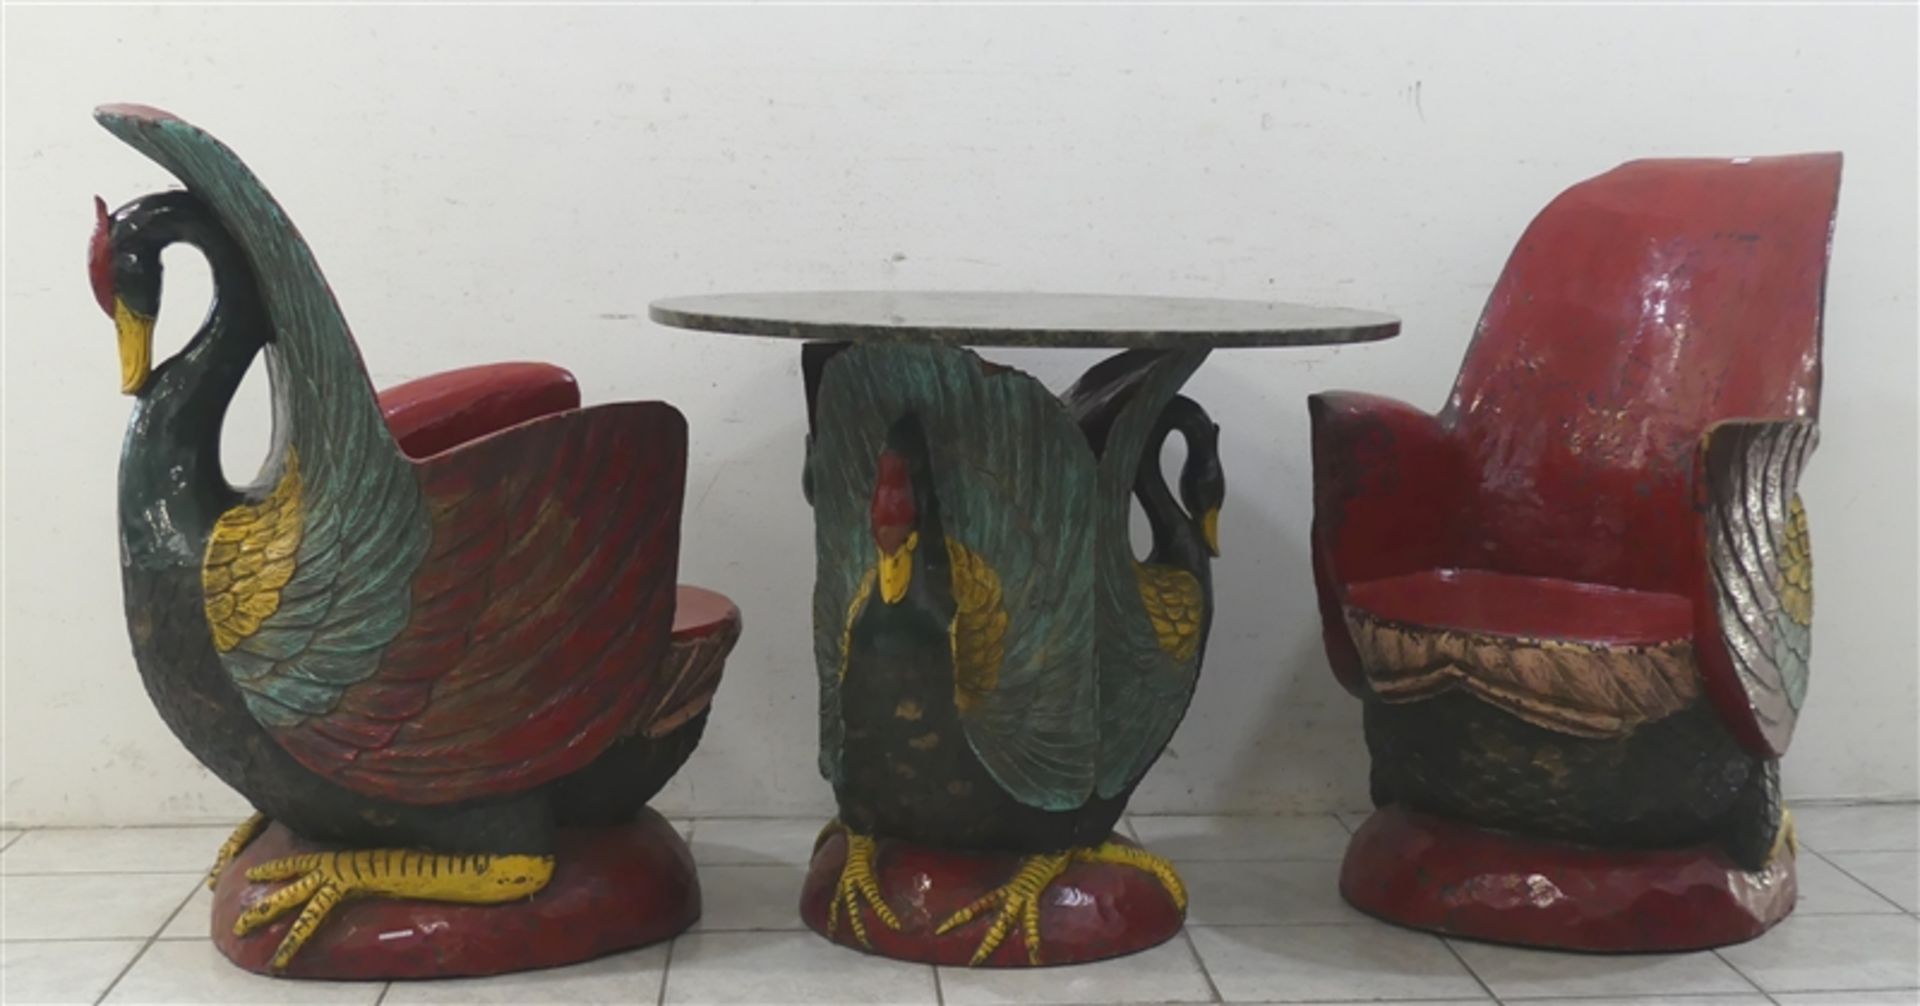 Sitzgarnitur Indonesien, 20. Jh., Massivholz, Reliefschnitzerei, bunter Vogeldekor, ehemals